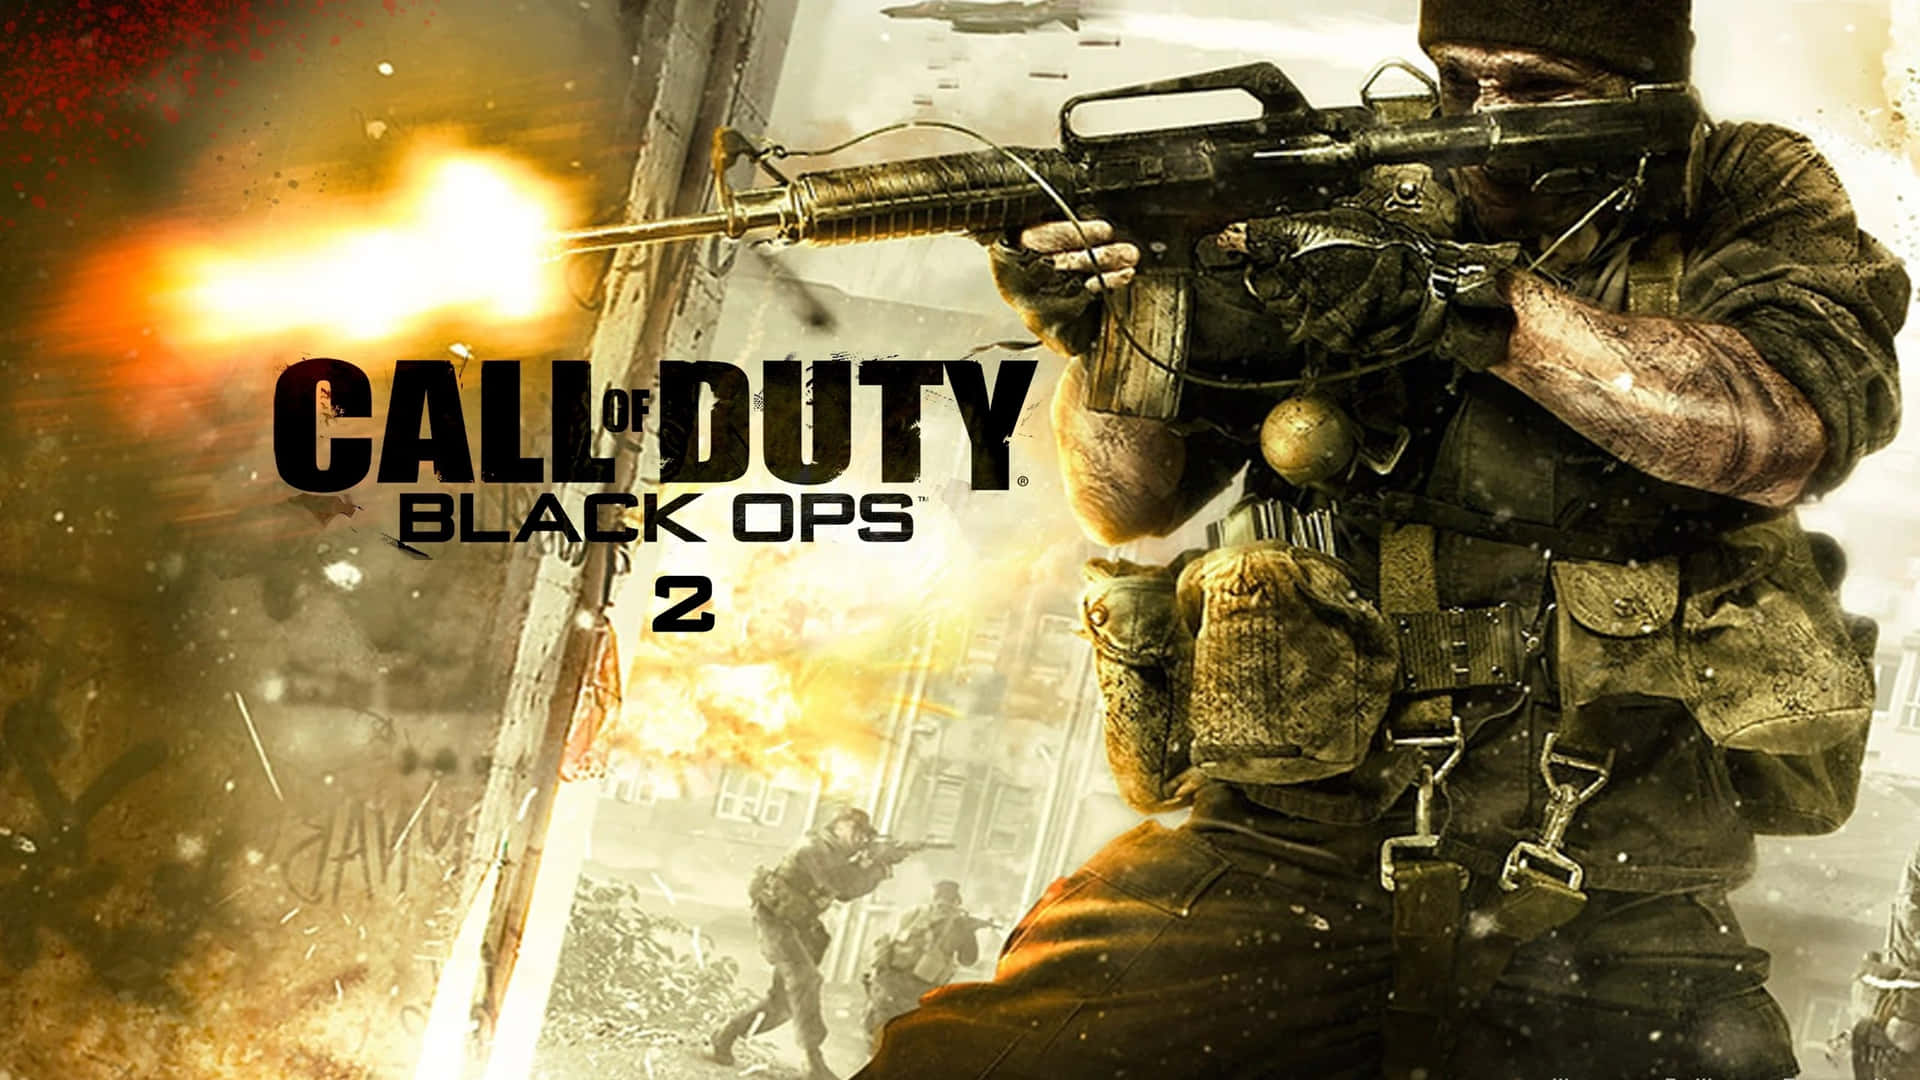 2560 X 1440 Black Ops 2 Game Poster Wallpaper